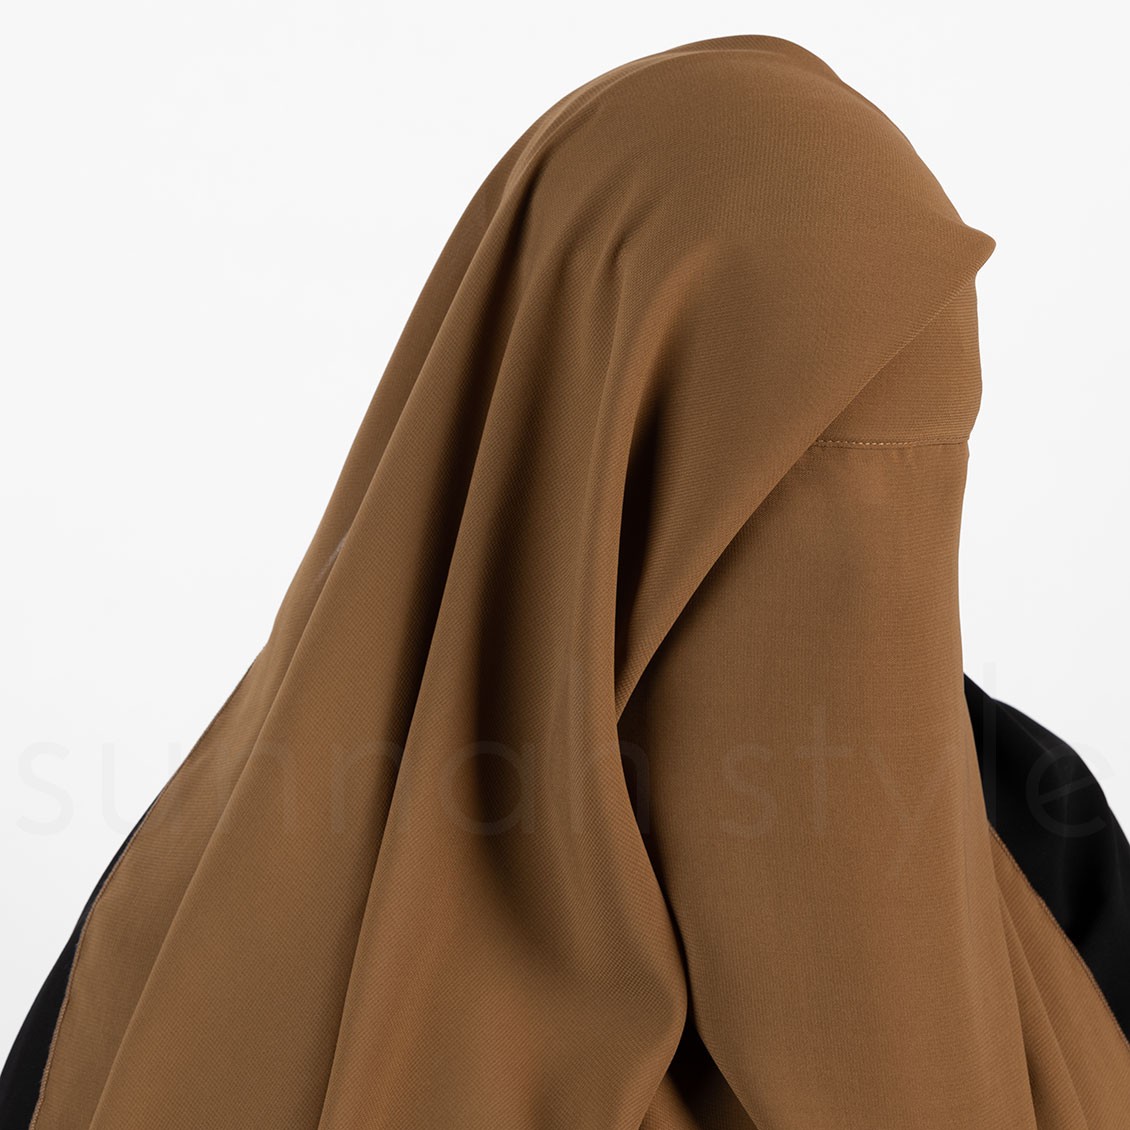 Sunnah Style Three Layer Niqab Caramel